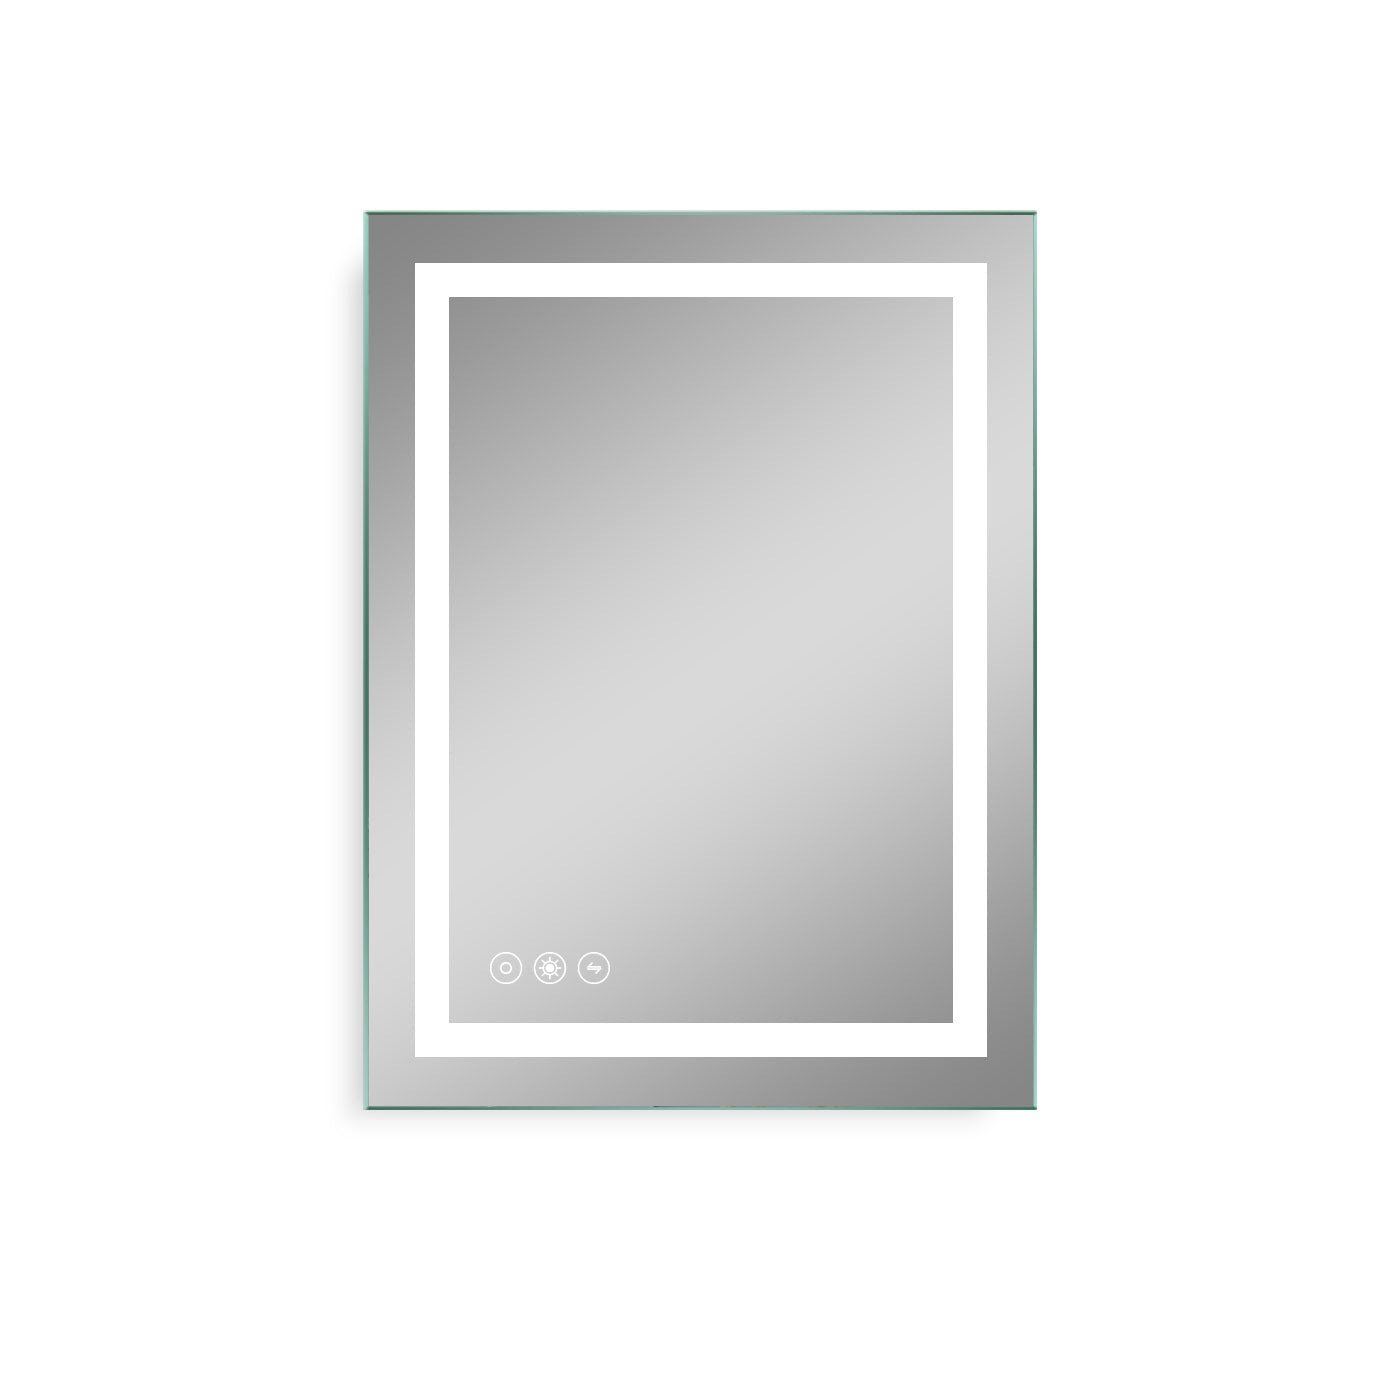 ZNTS 24 x 32 Led Mirror 3 brightness x 3 colors Anti-fog bathroom,bedroom W1355104169